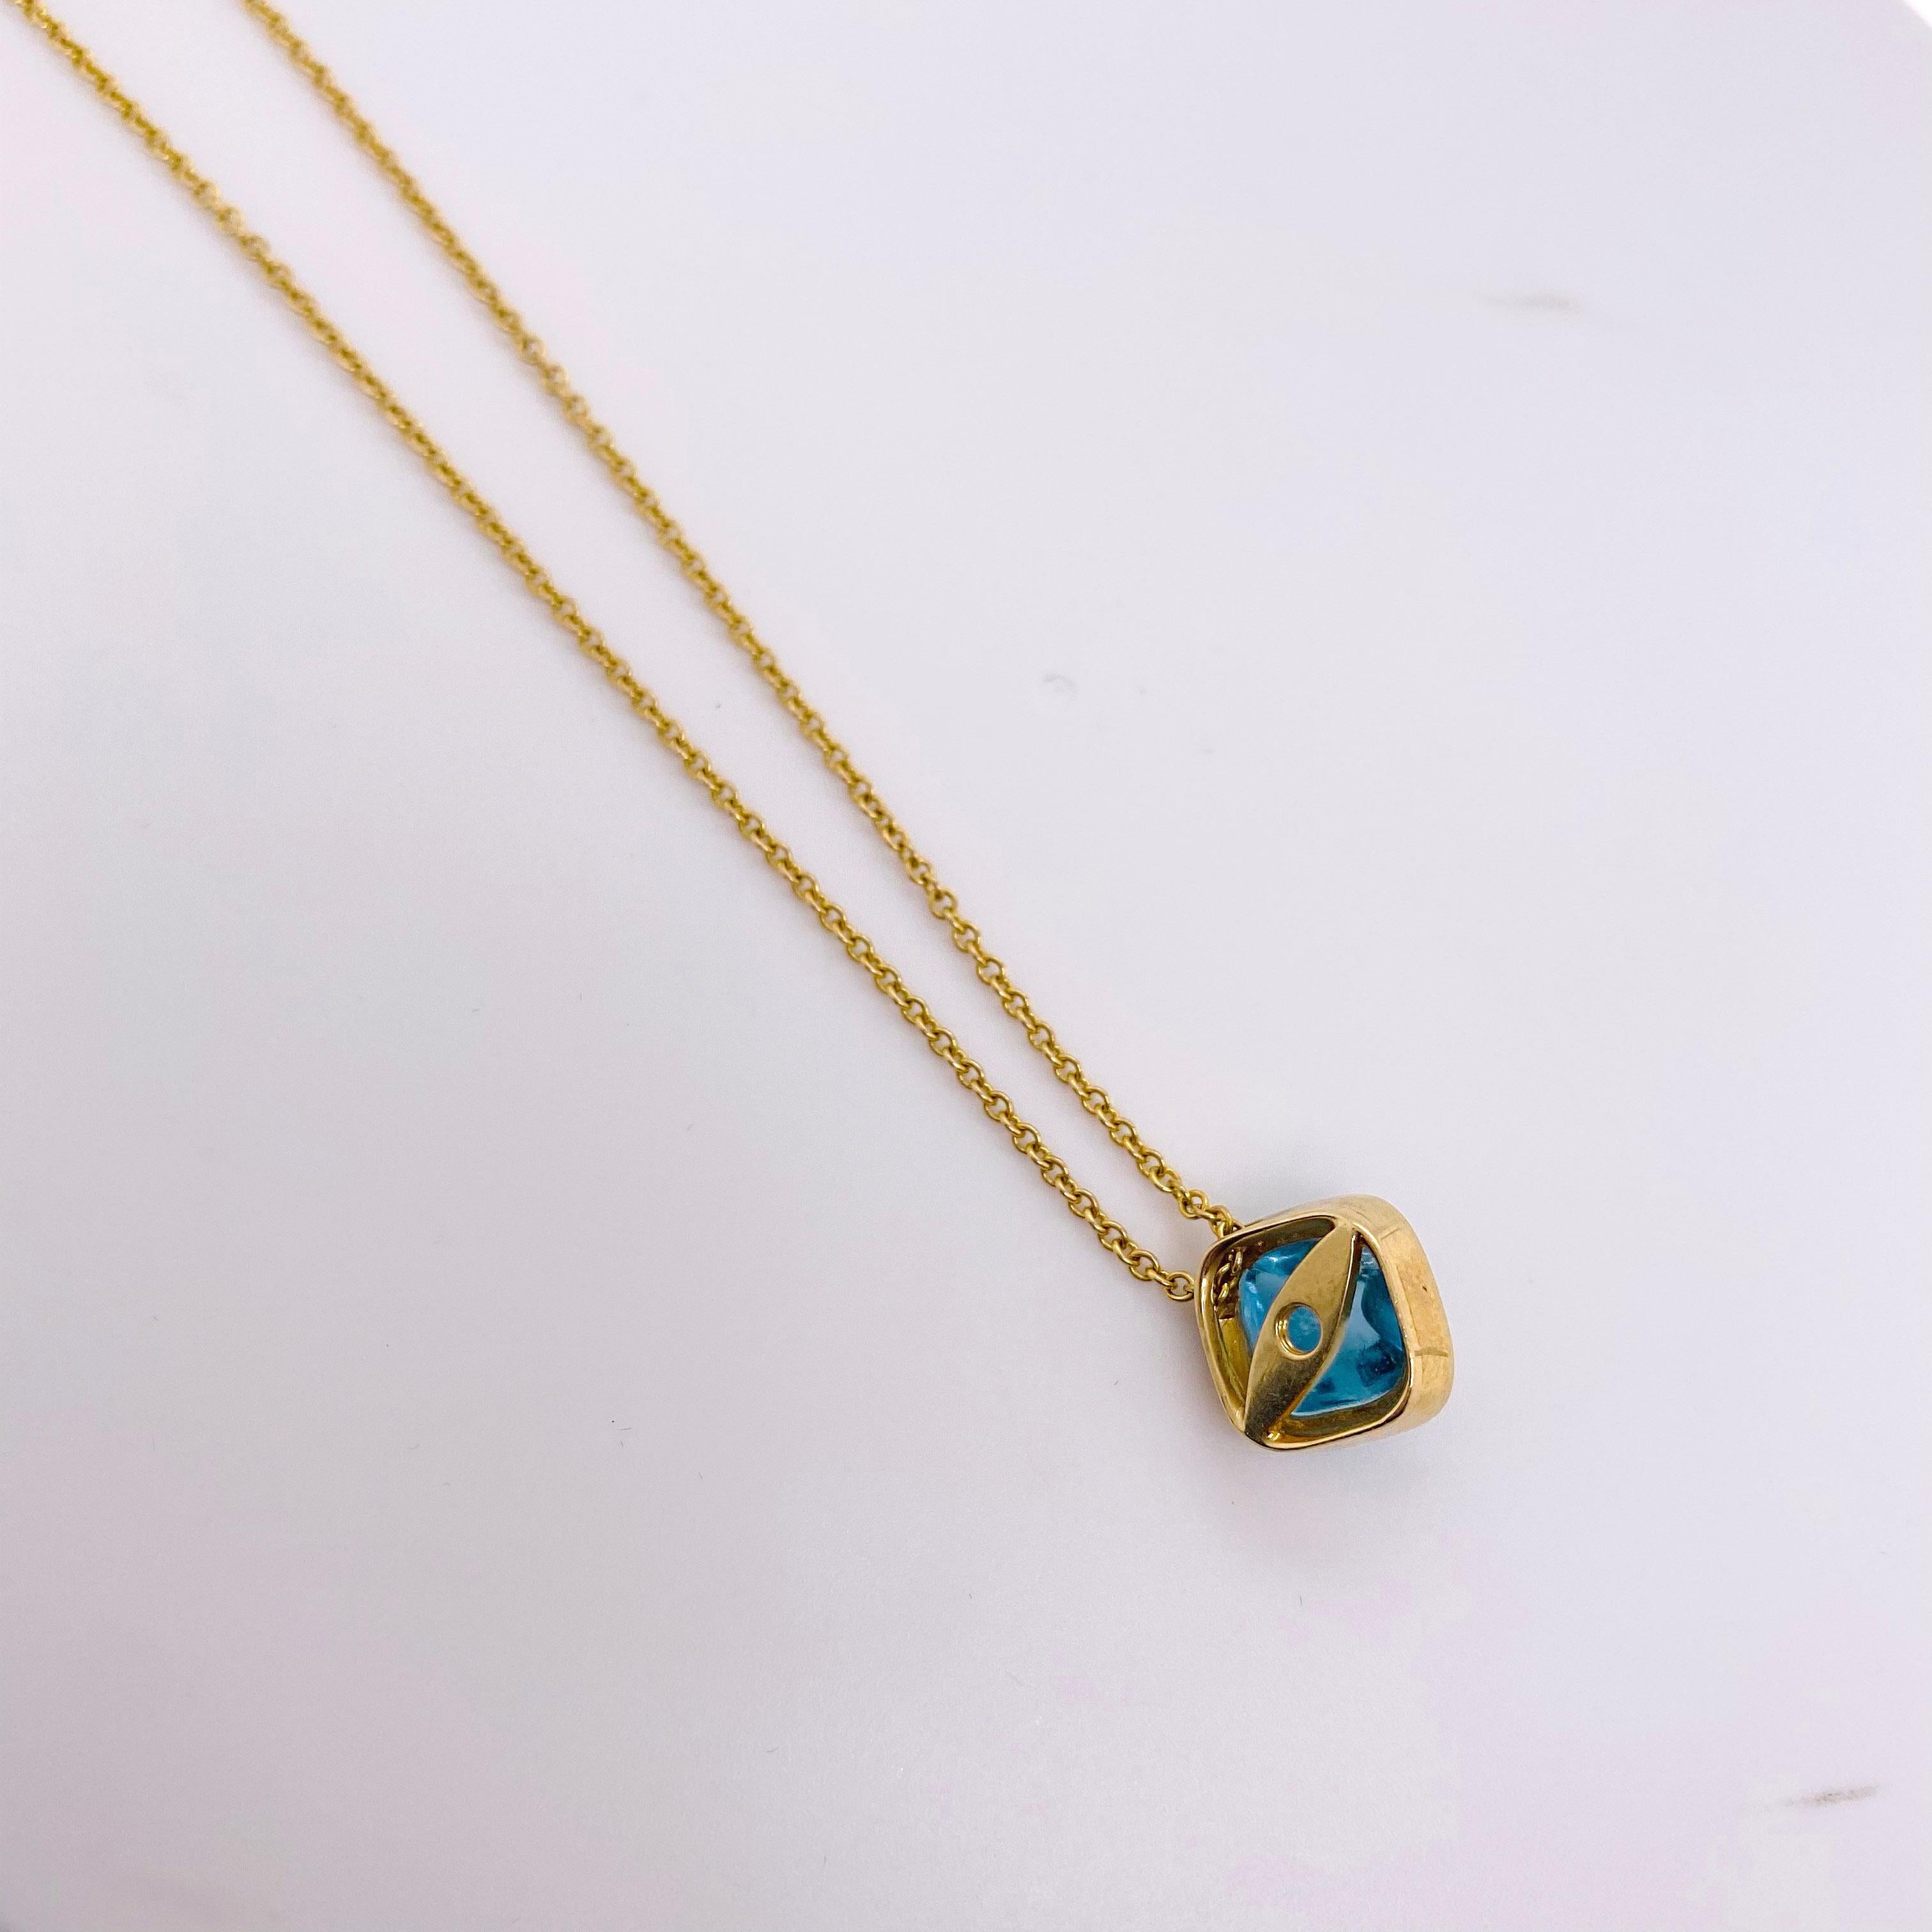 Modern Aquamarine Pendant Necklace, Yellow Gold, Slide Pendant Blue Aqua